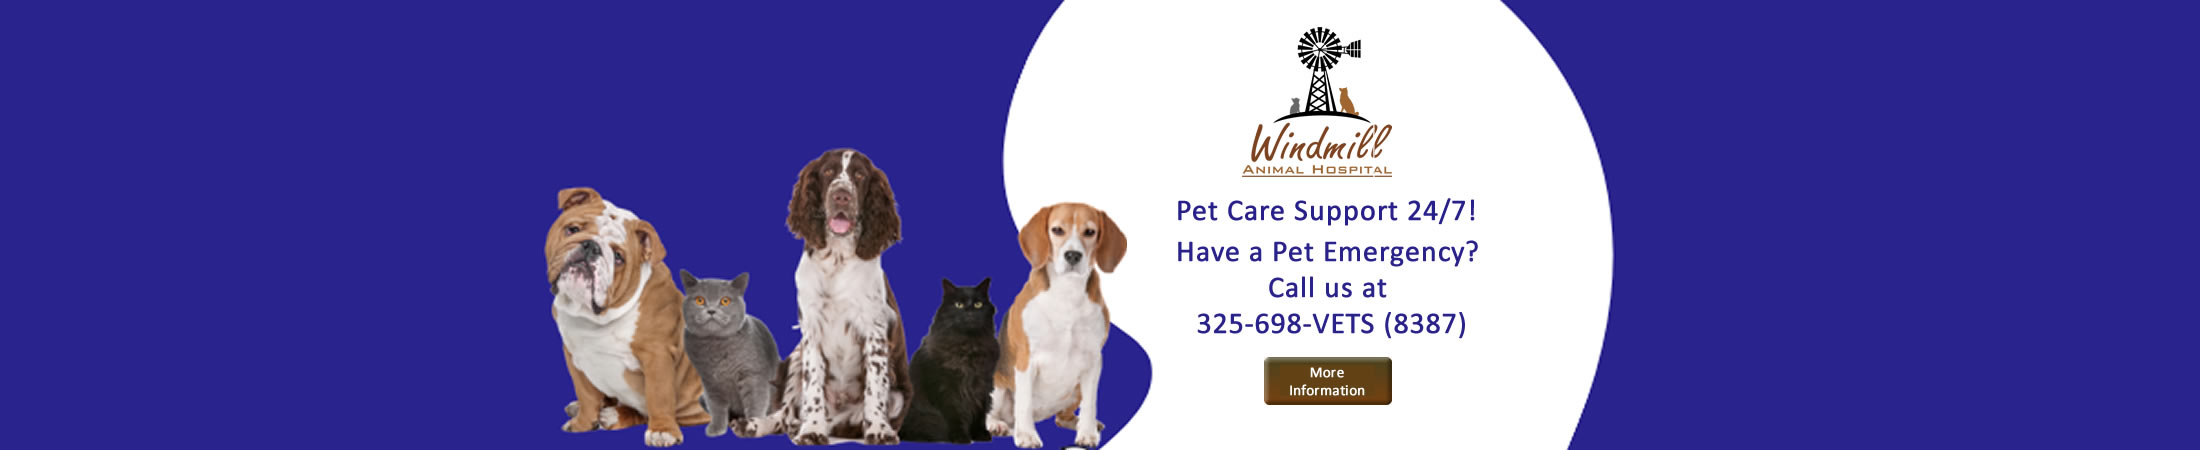 Windmill Animal Hospital 24 Hour Pet Care